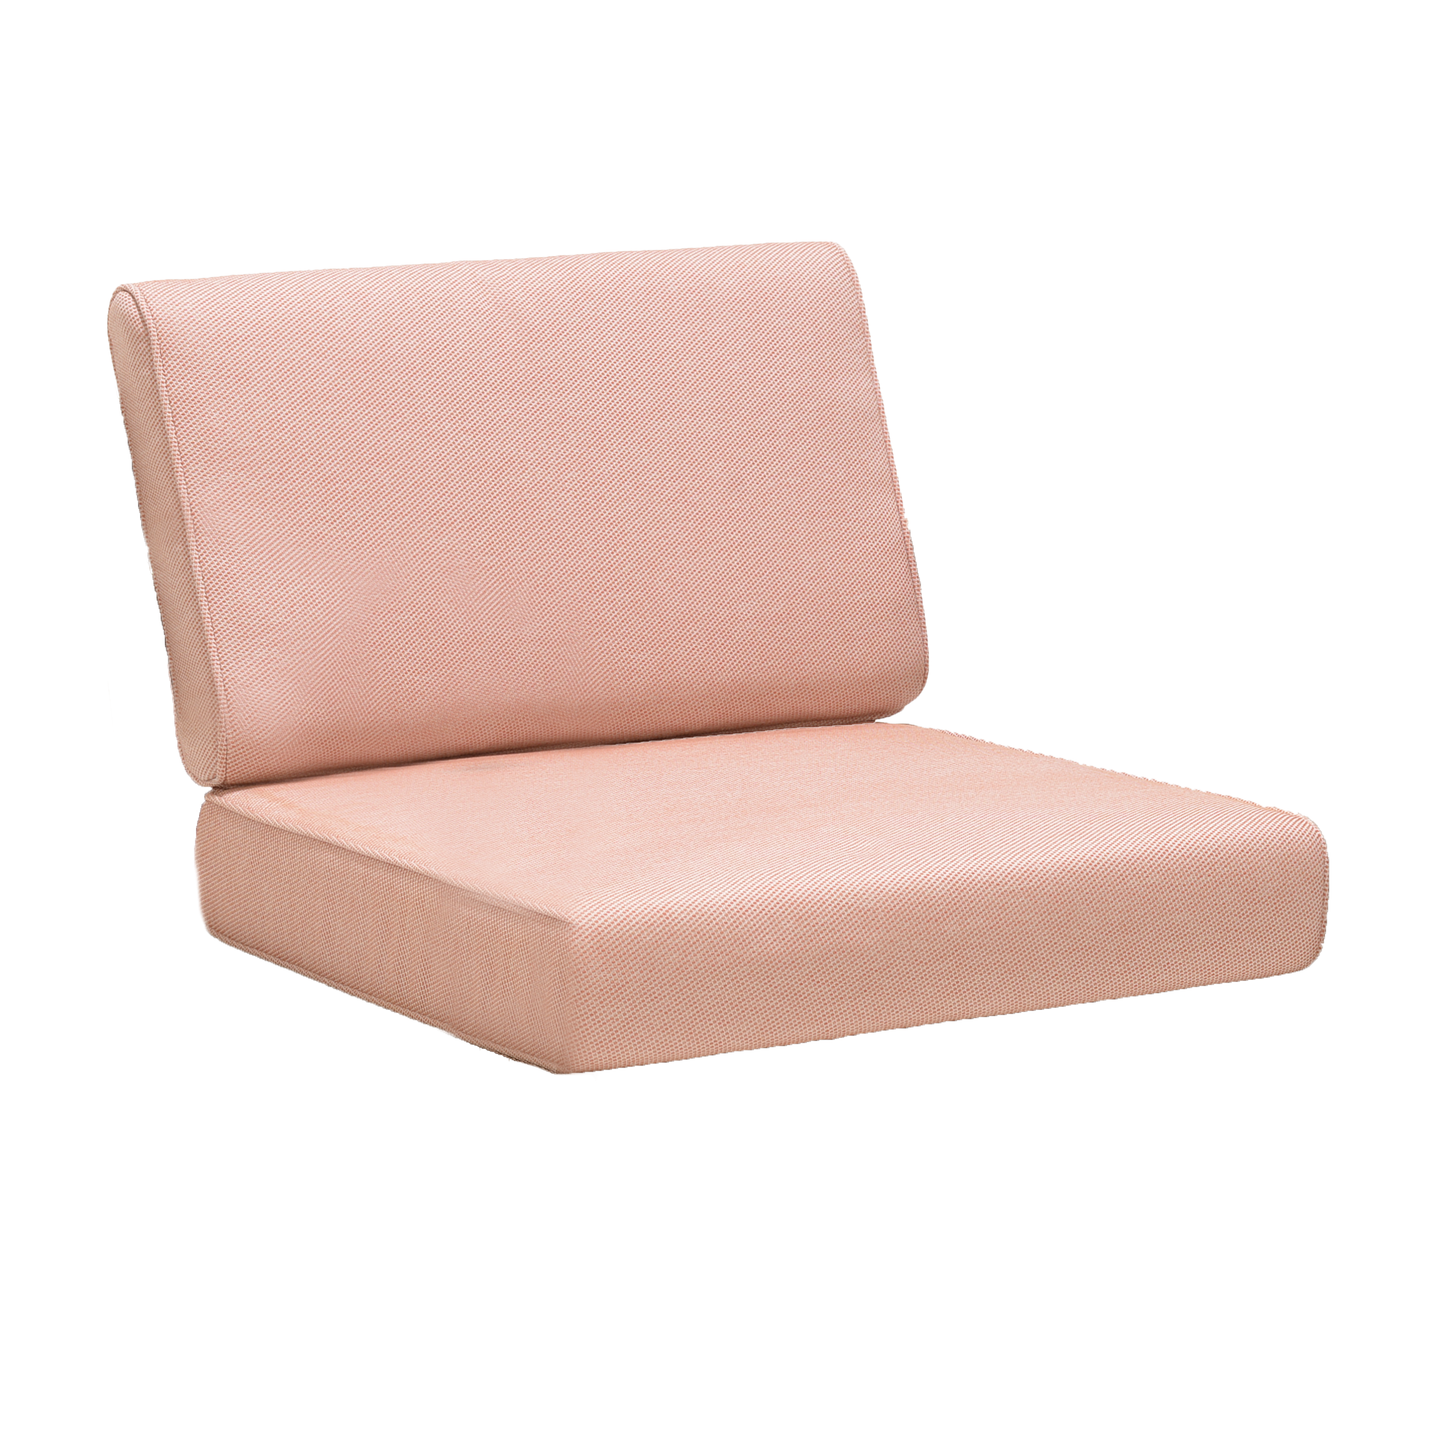 Agate Rope & Teak 100% FSC Certified Solid Wood Sofa-Chair